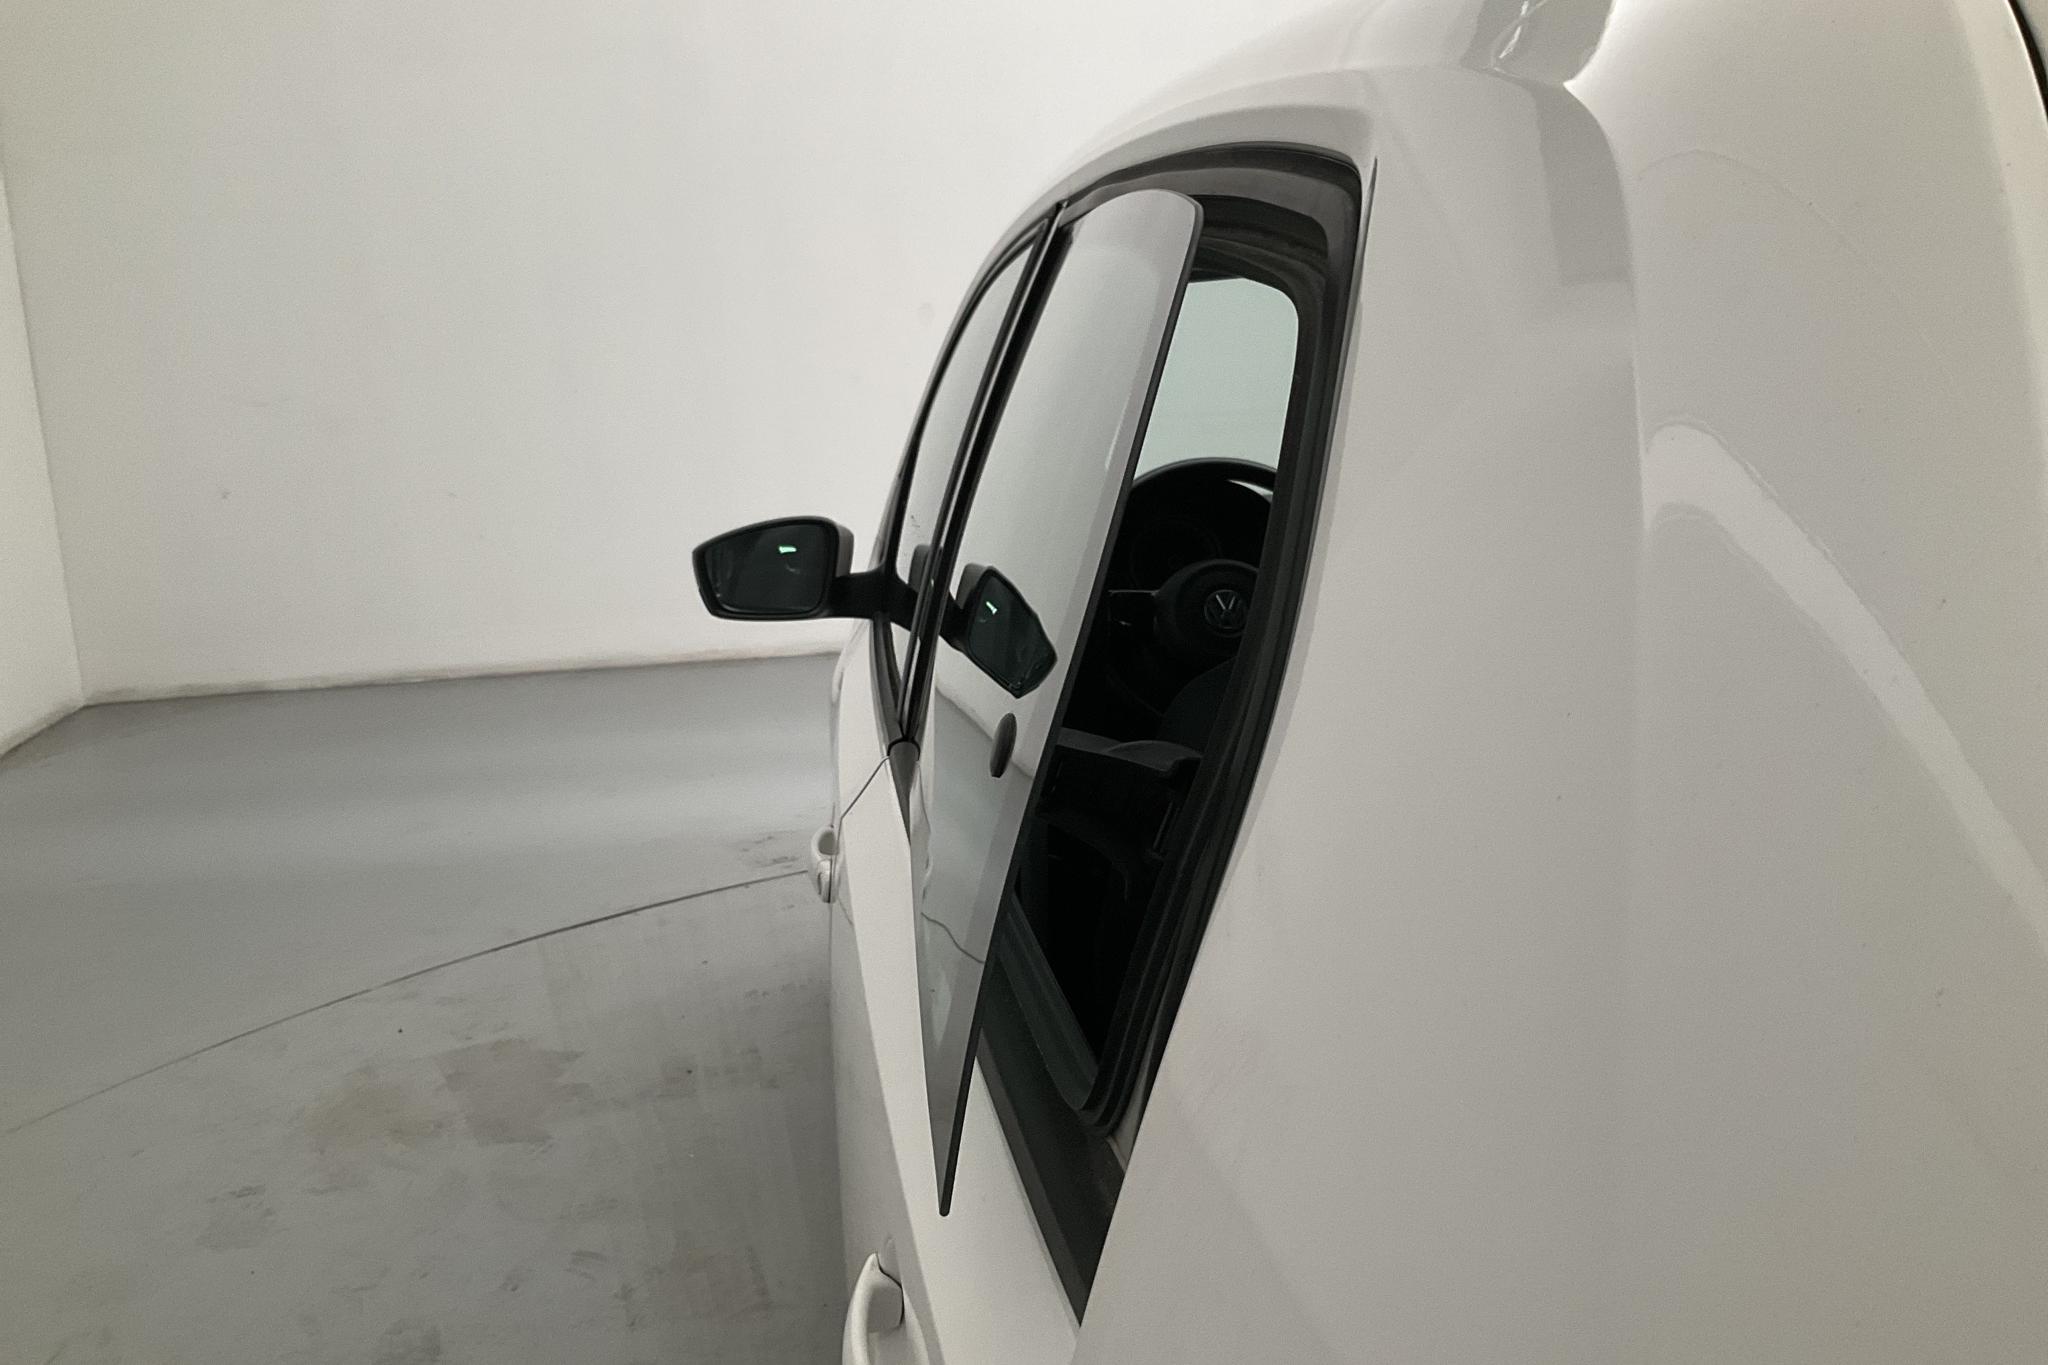 VW up! 1.0 5dr CNG (68hk) - 77 420 km - Manual - white - 2013